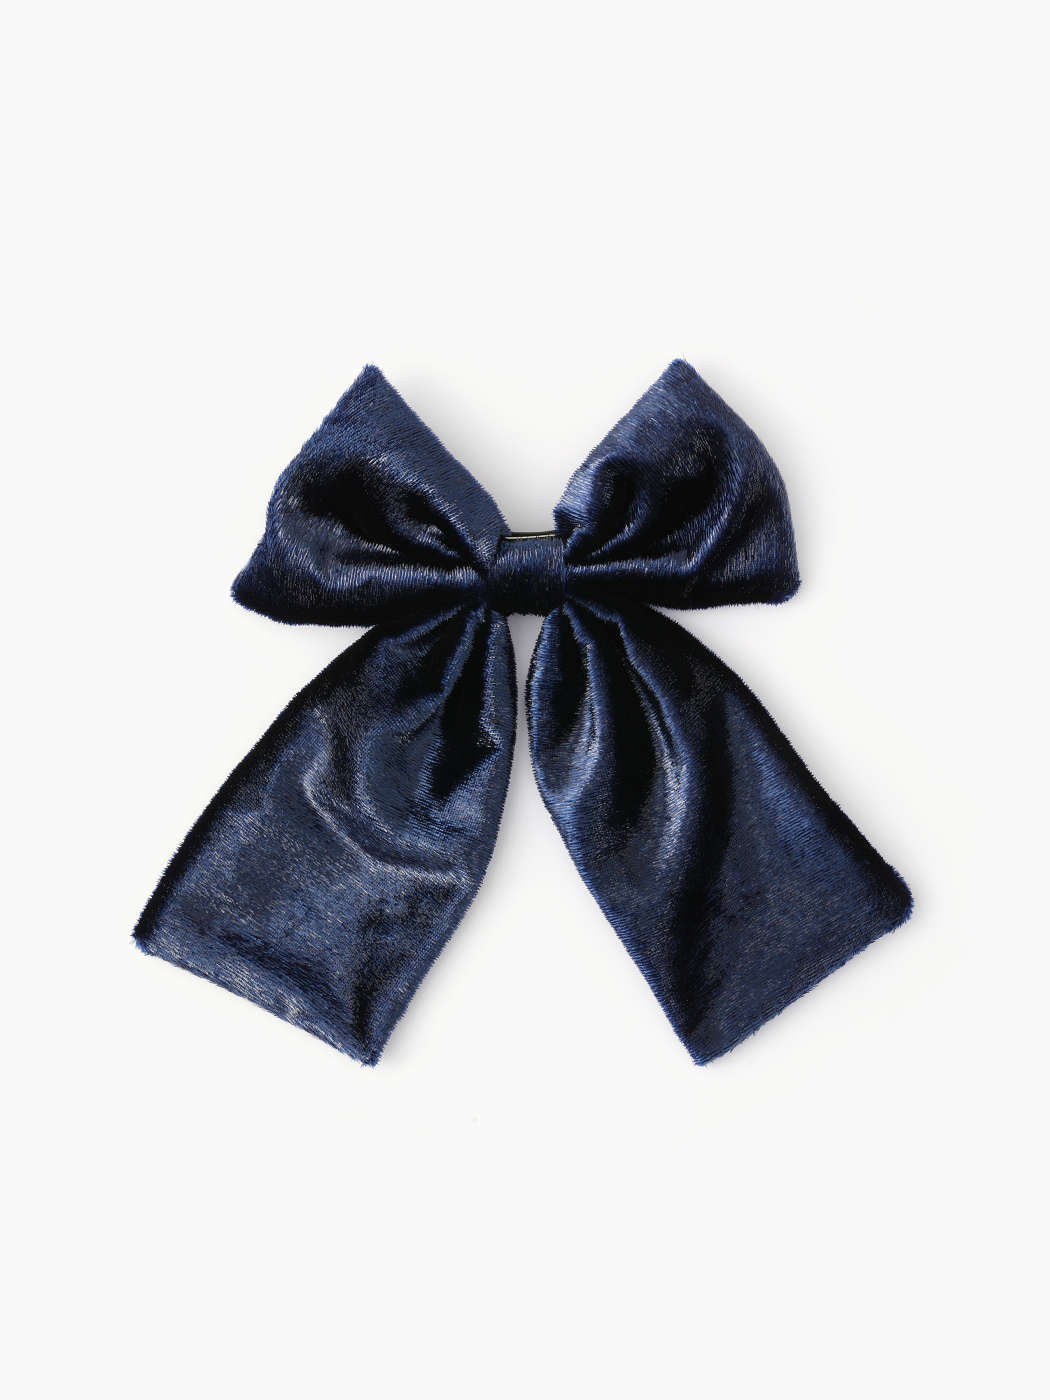 Tutorial} Fabric Ribbon Hair Bows - Our Thrifty Ideas